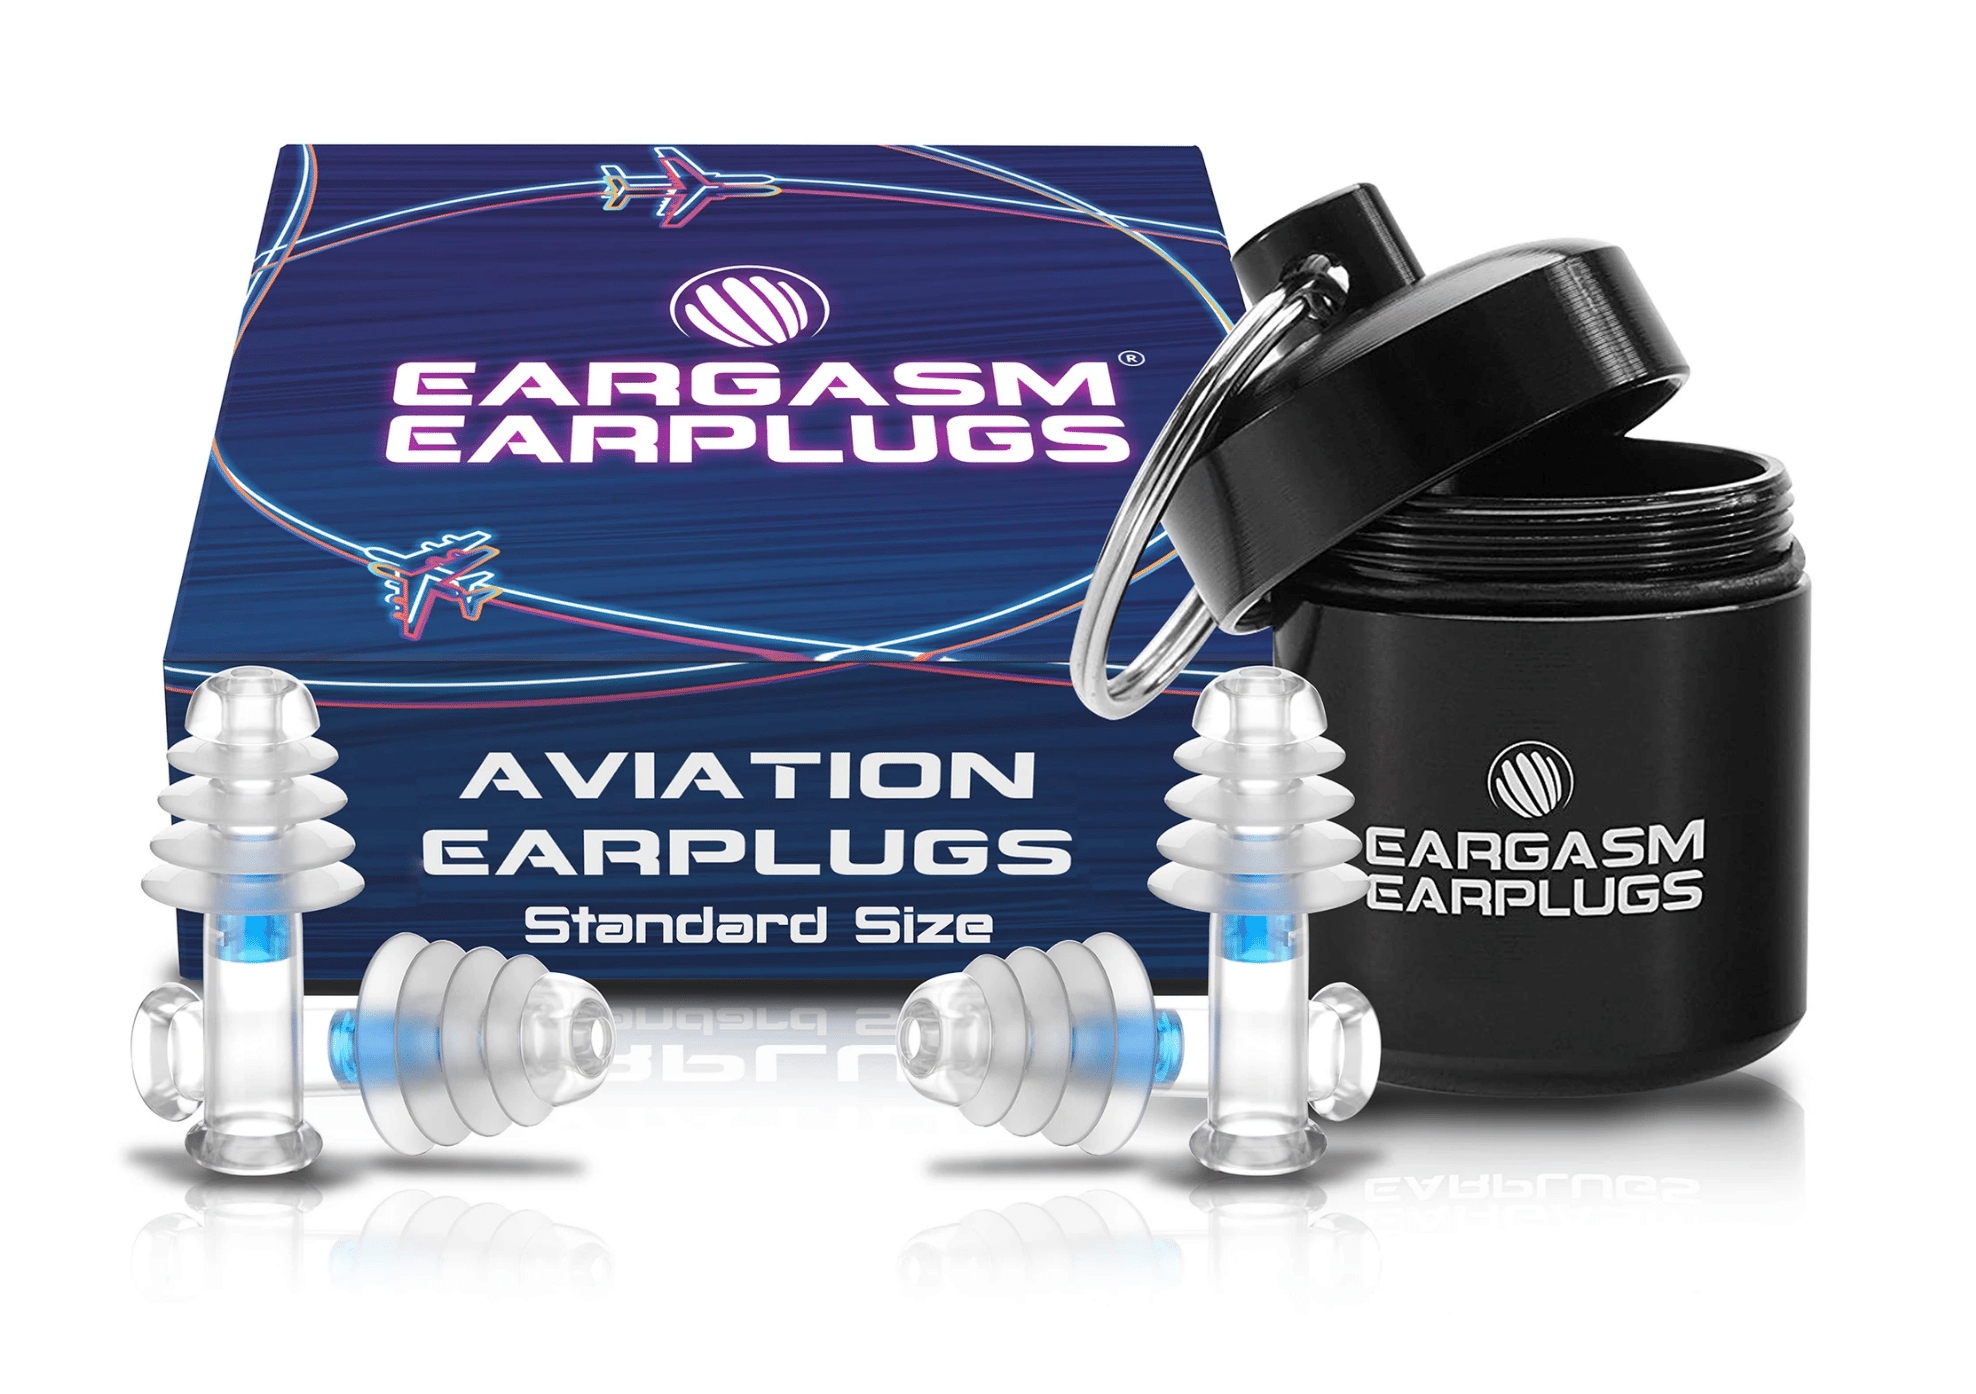 Aviation Earplugs - Reduce Ear Pain During Air Travel!